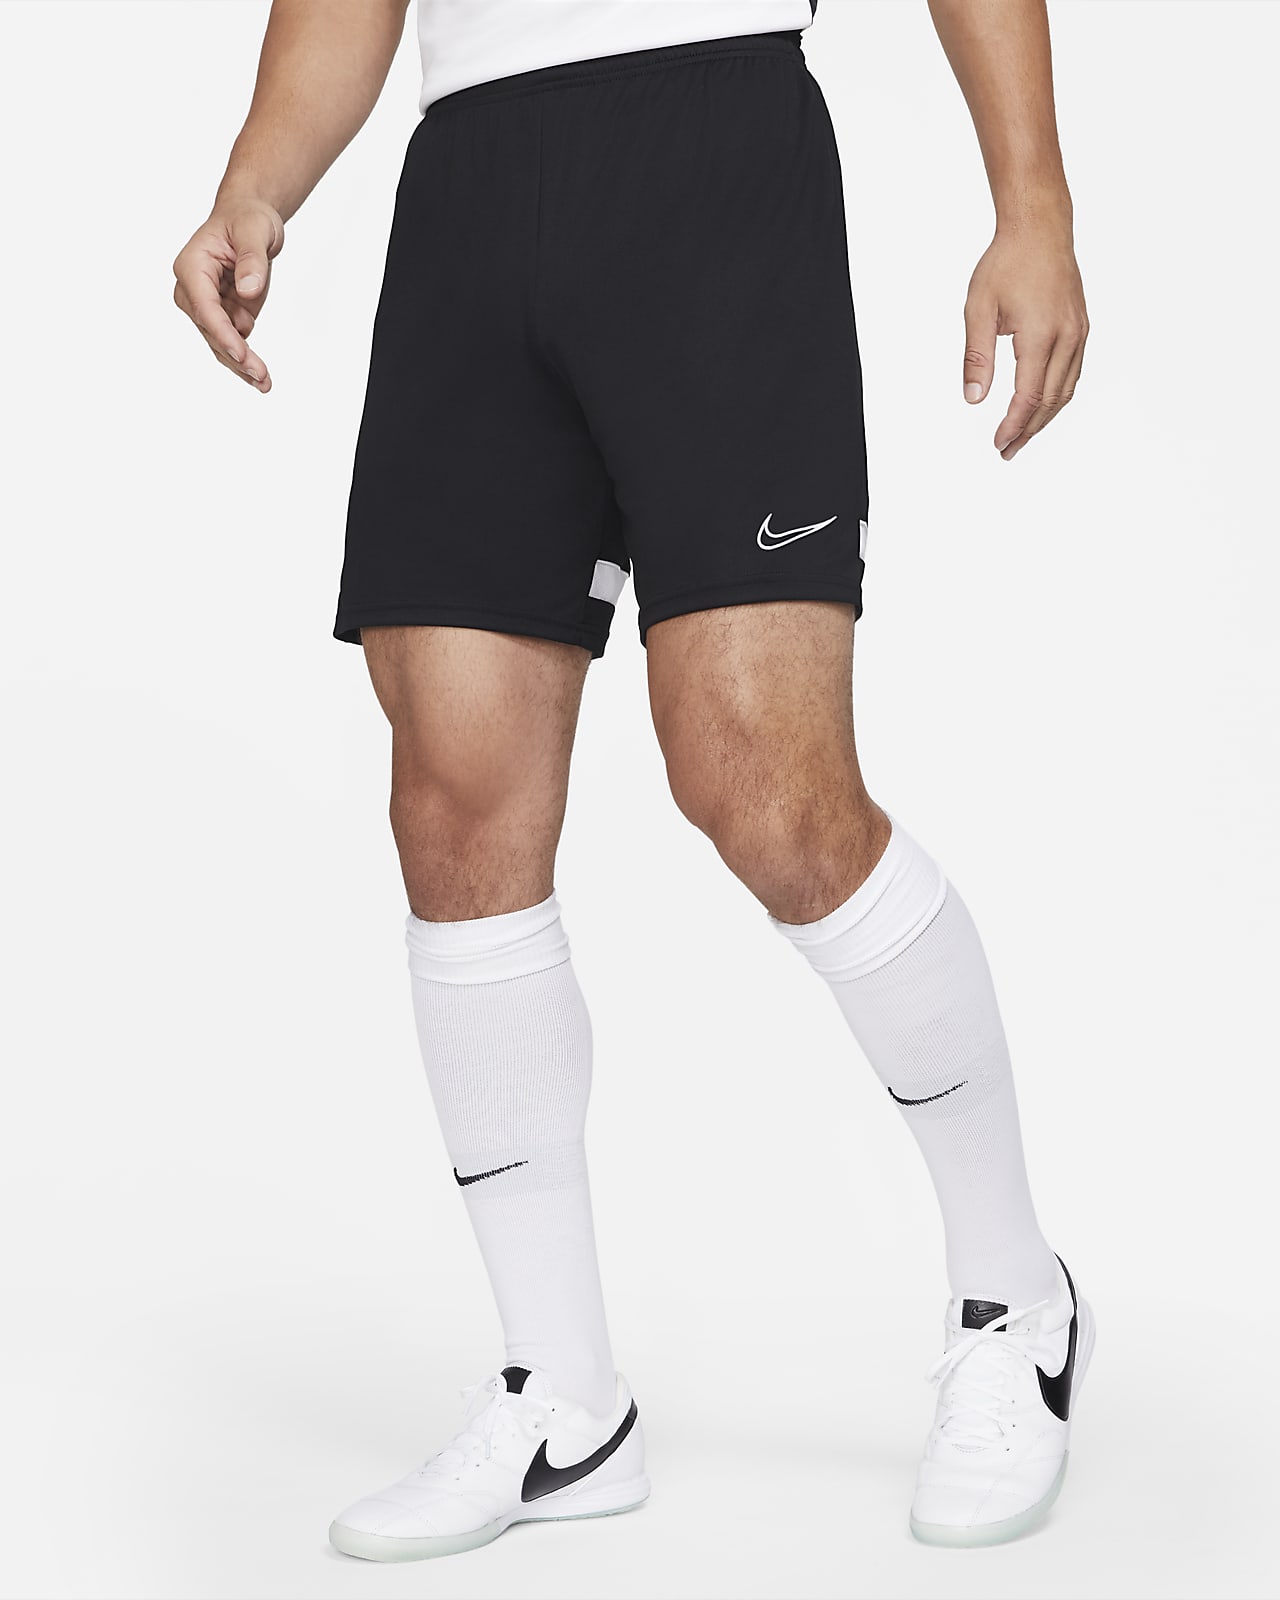 Nike Soccer Dri-FIT Academy polyknit pants in navy